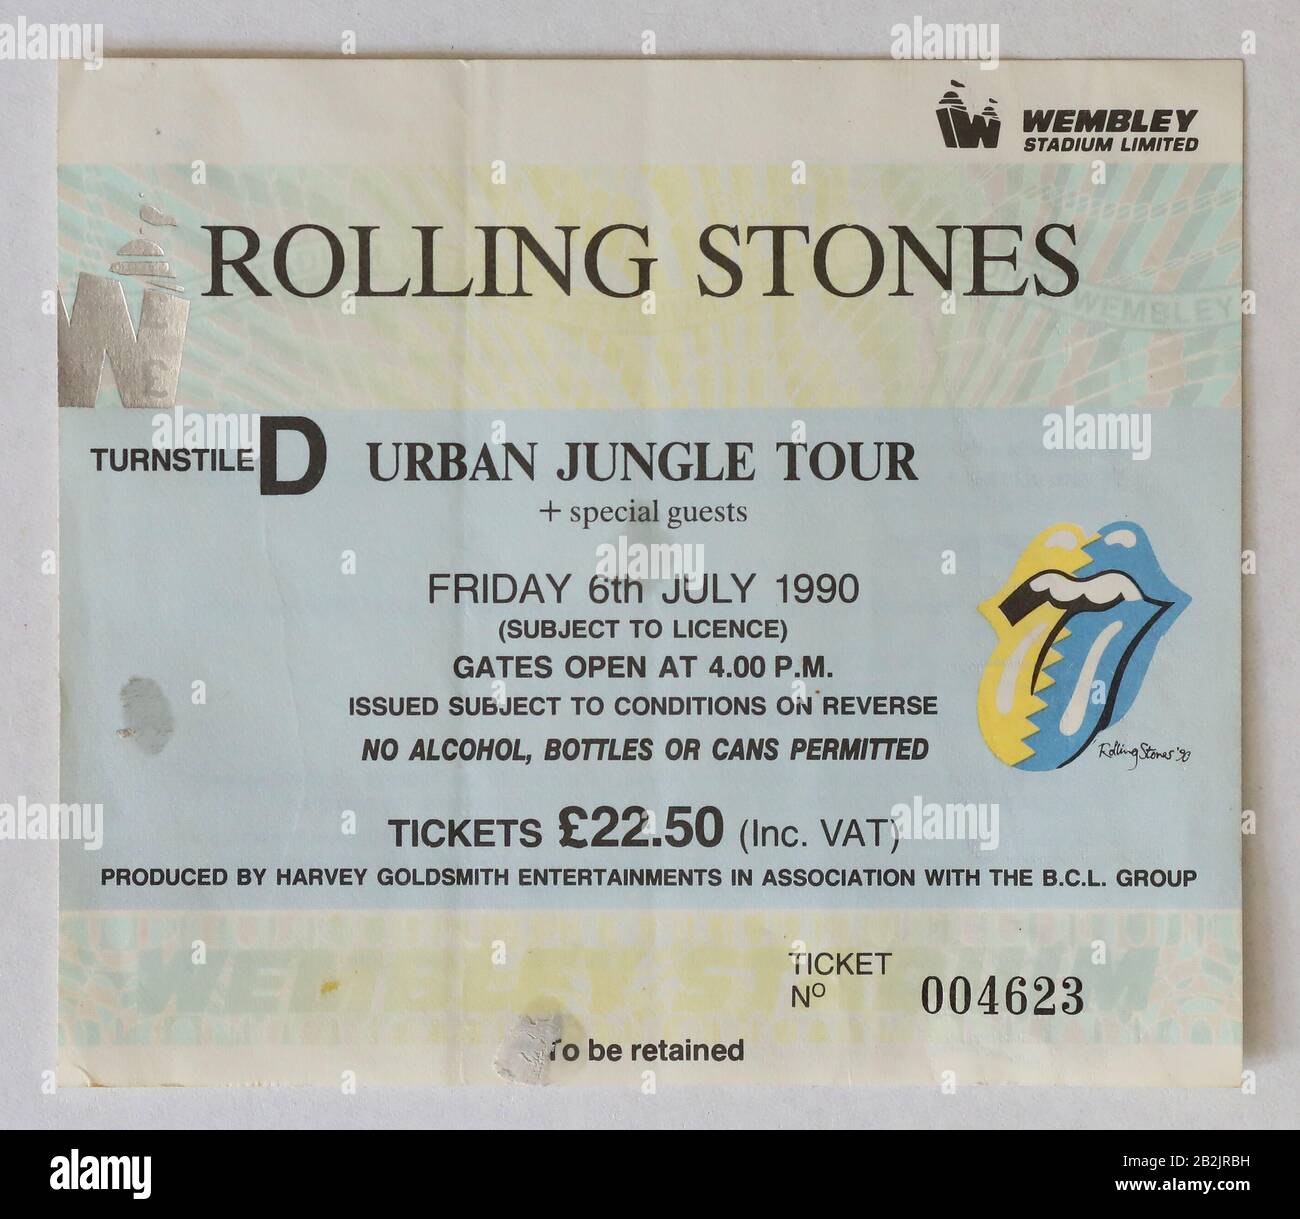 Rolling Stones Urban Jungle Tour Gig Ticket Stub Wembley Stadium 6. Juli 1990 Bild von James Boardman. Stockfoto